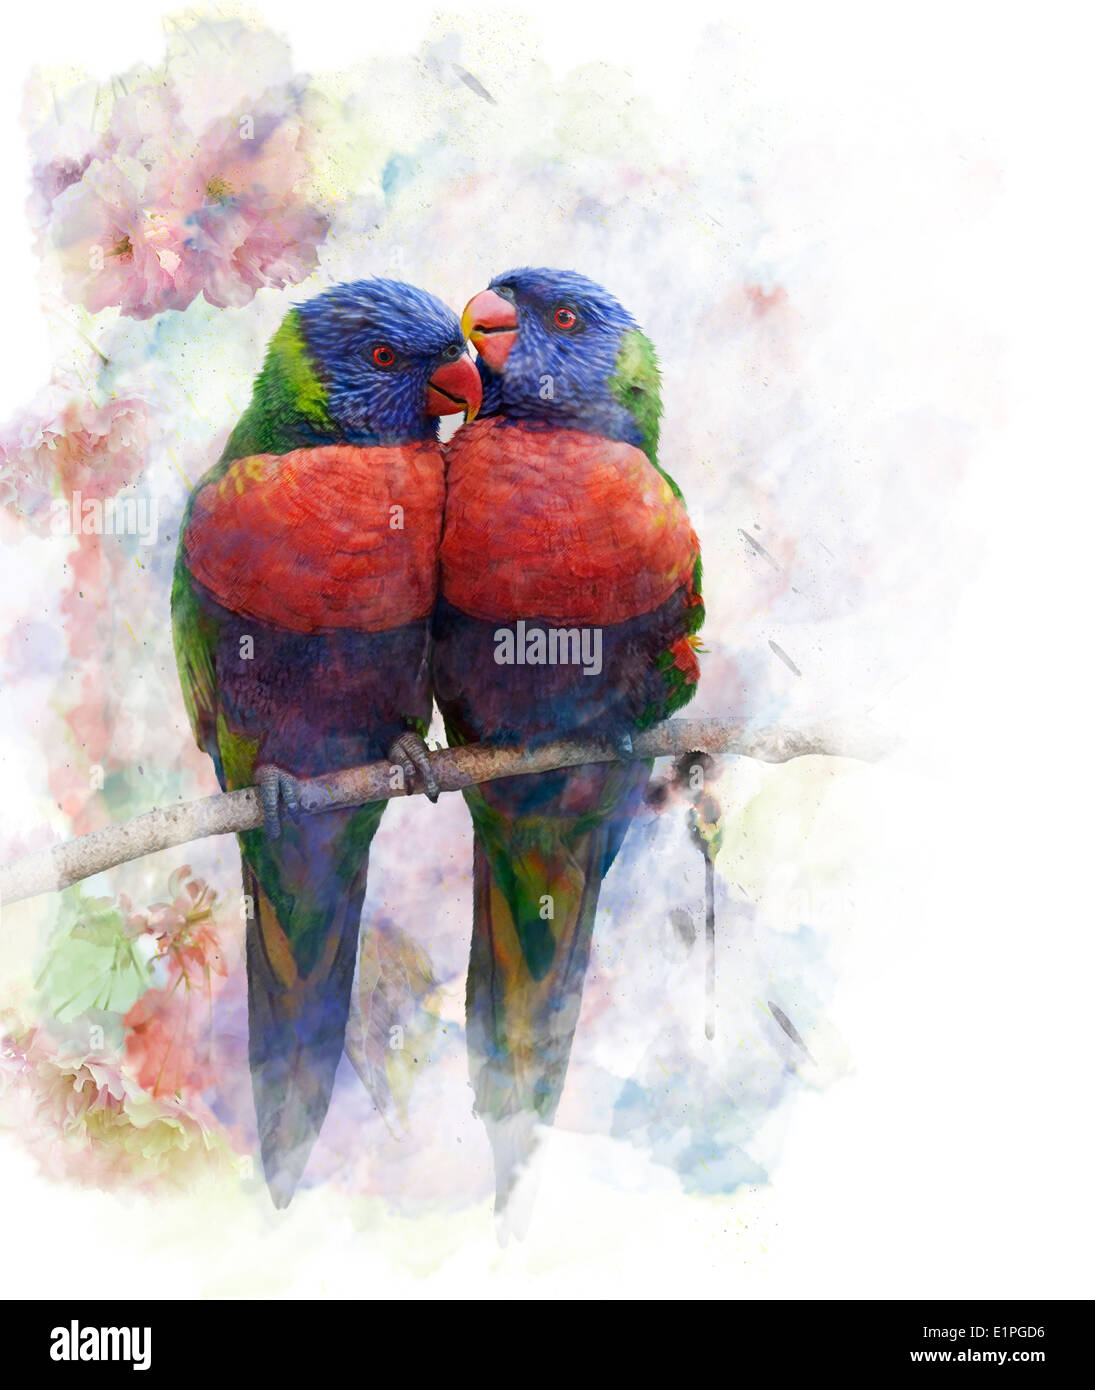 Watercolor Digital Painting Of Rainbow Lorikeet Parrots Stock Photo